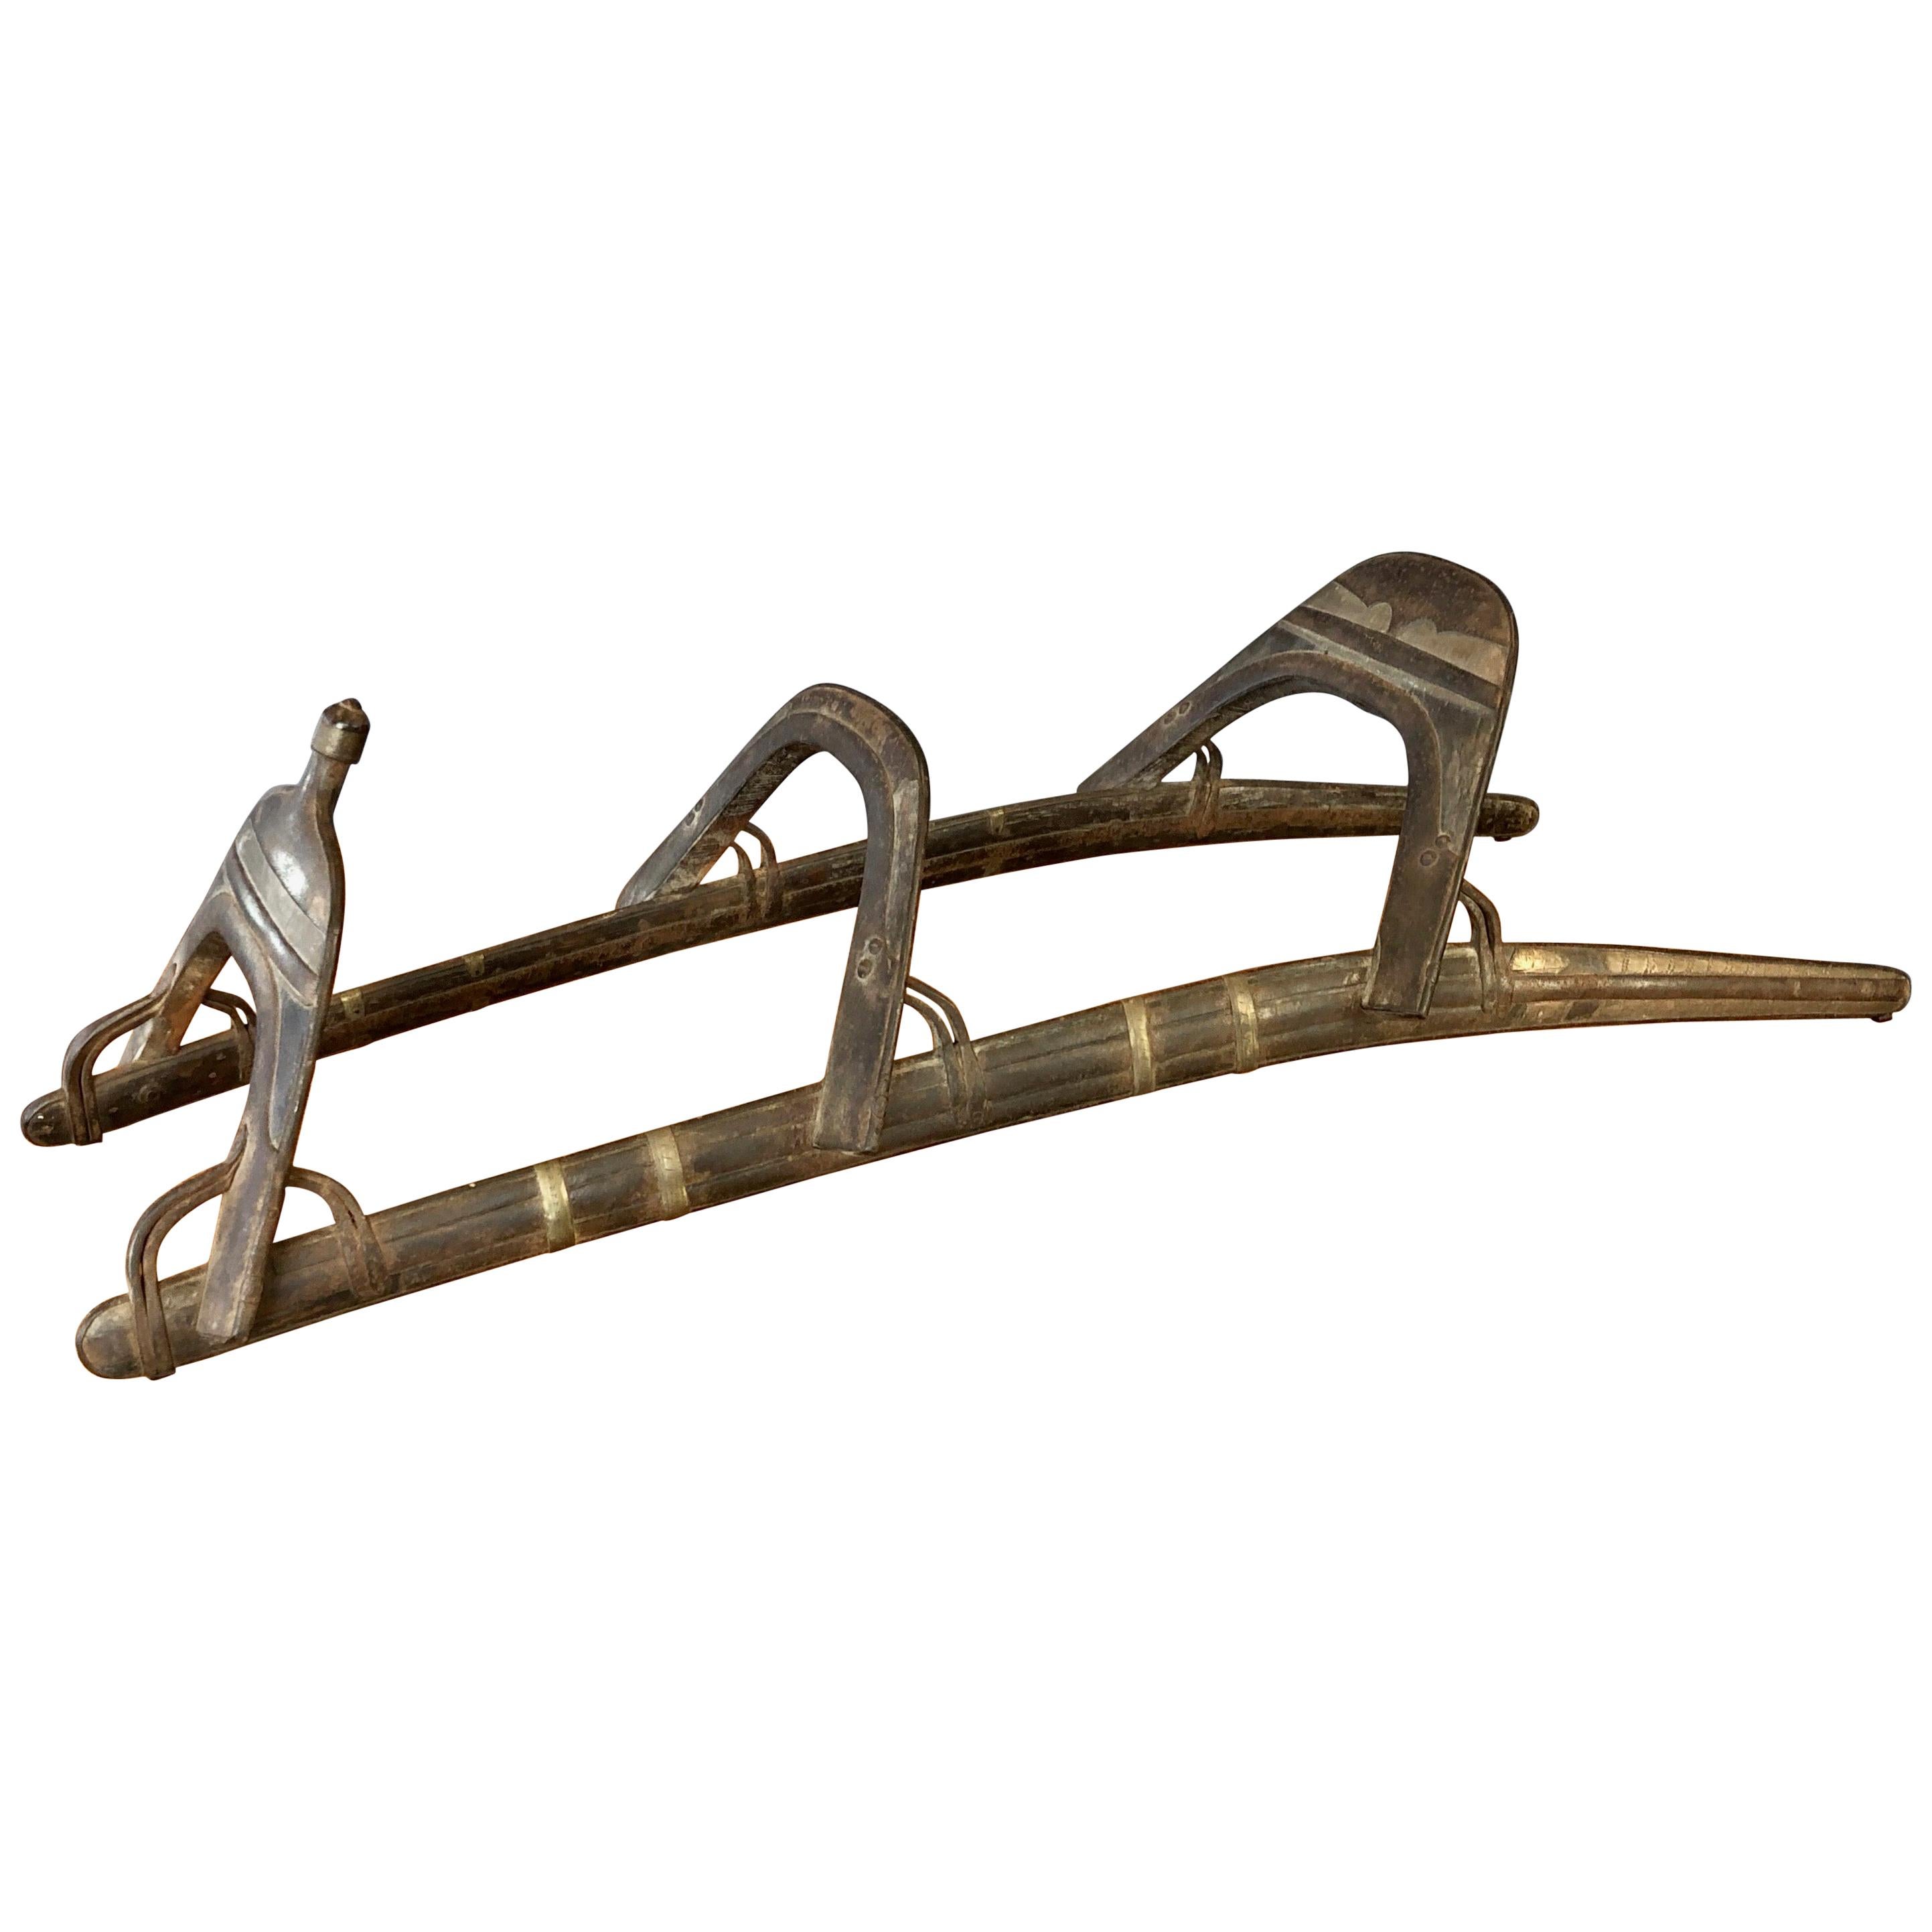 Egyptian Regiment des Dromadaires-Style Brass and Iron Camel Saddle, circa 1800